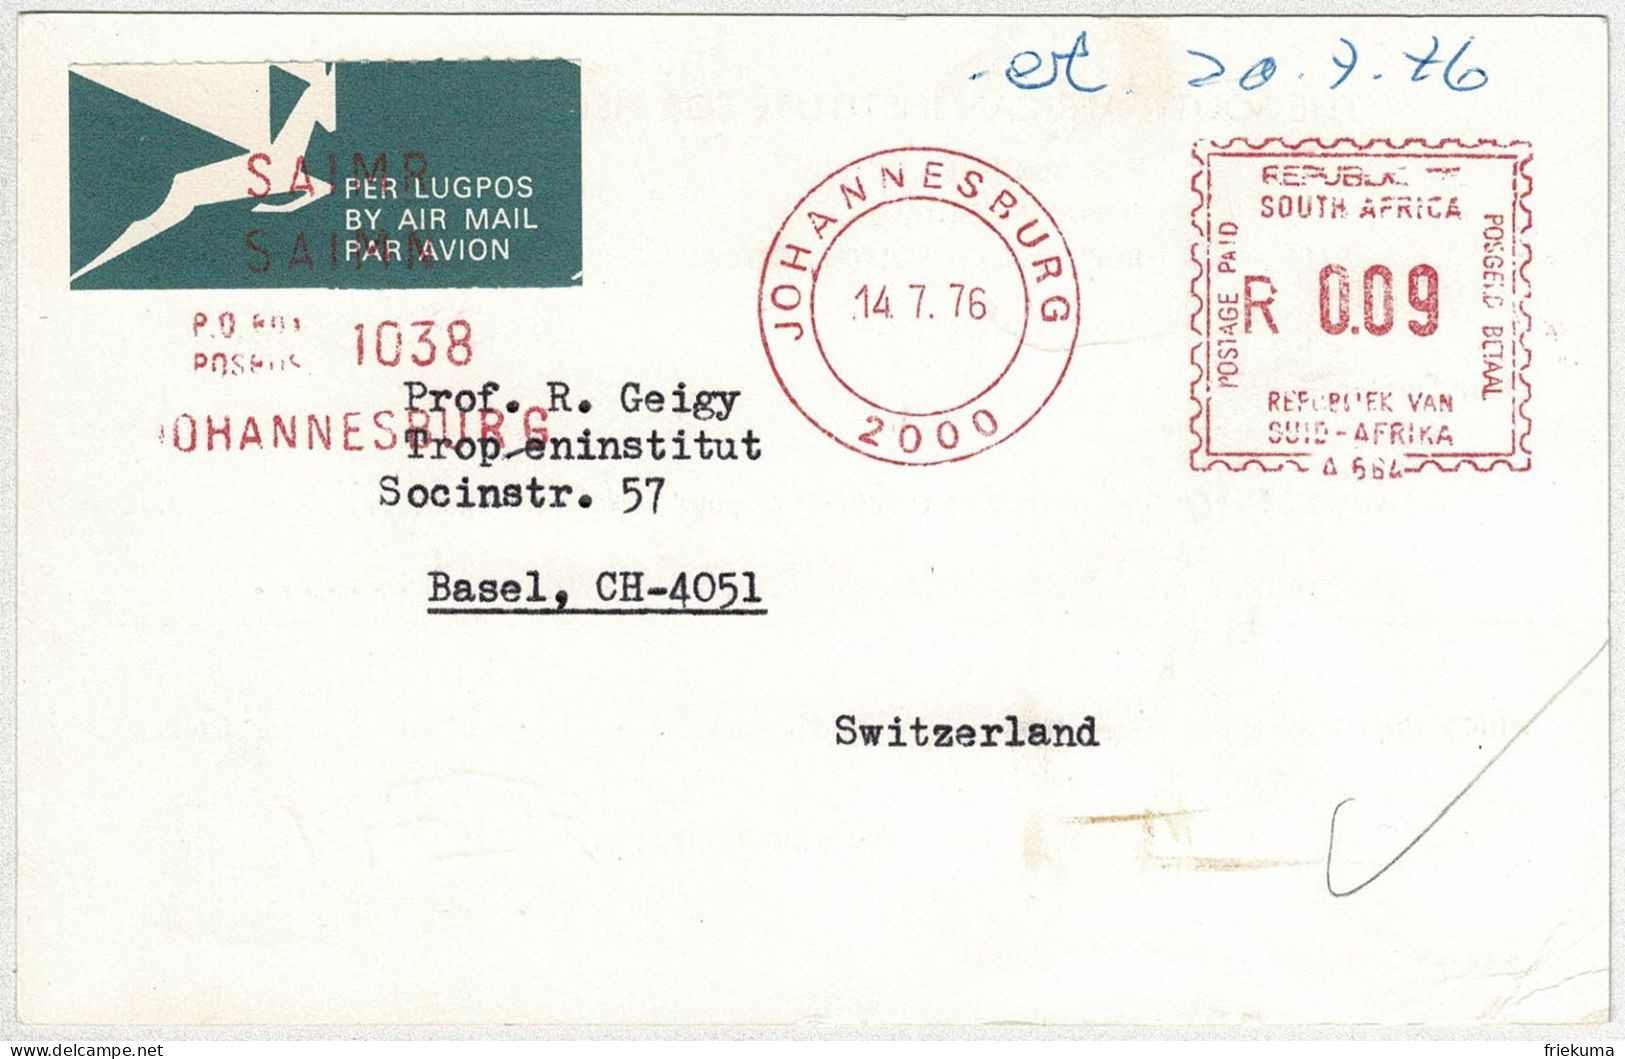 Südafrika / South Africa 1976, Postkarte Luftpost / Air Mail Freistempel / Meterstamp Johannesburg - Basel (Schweiz)  - Storia Postale